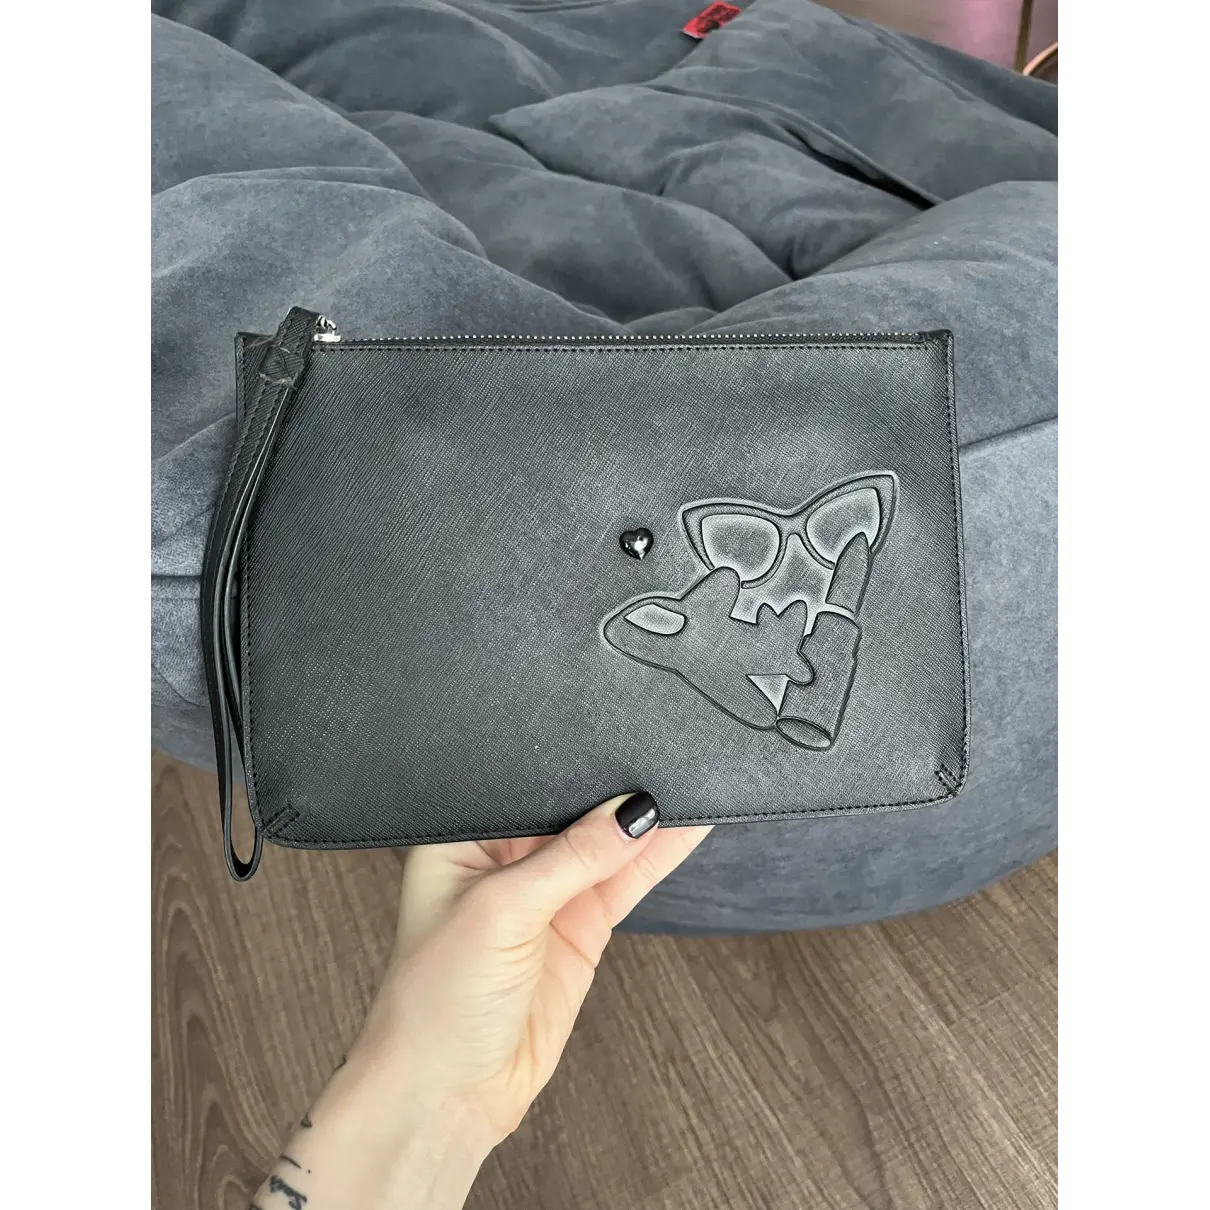 Buy Pinko Leather clutch bag online